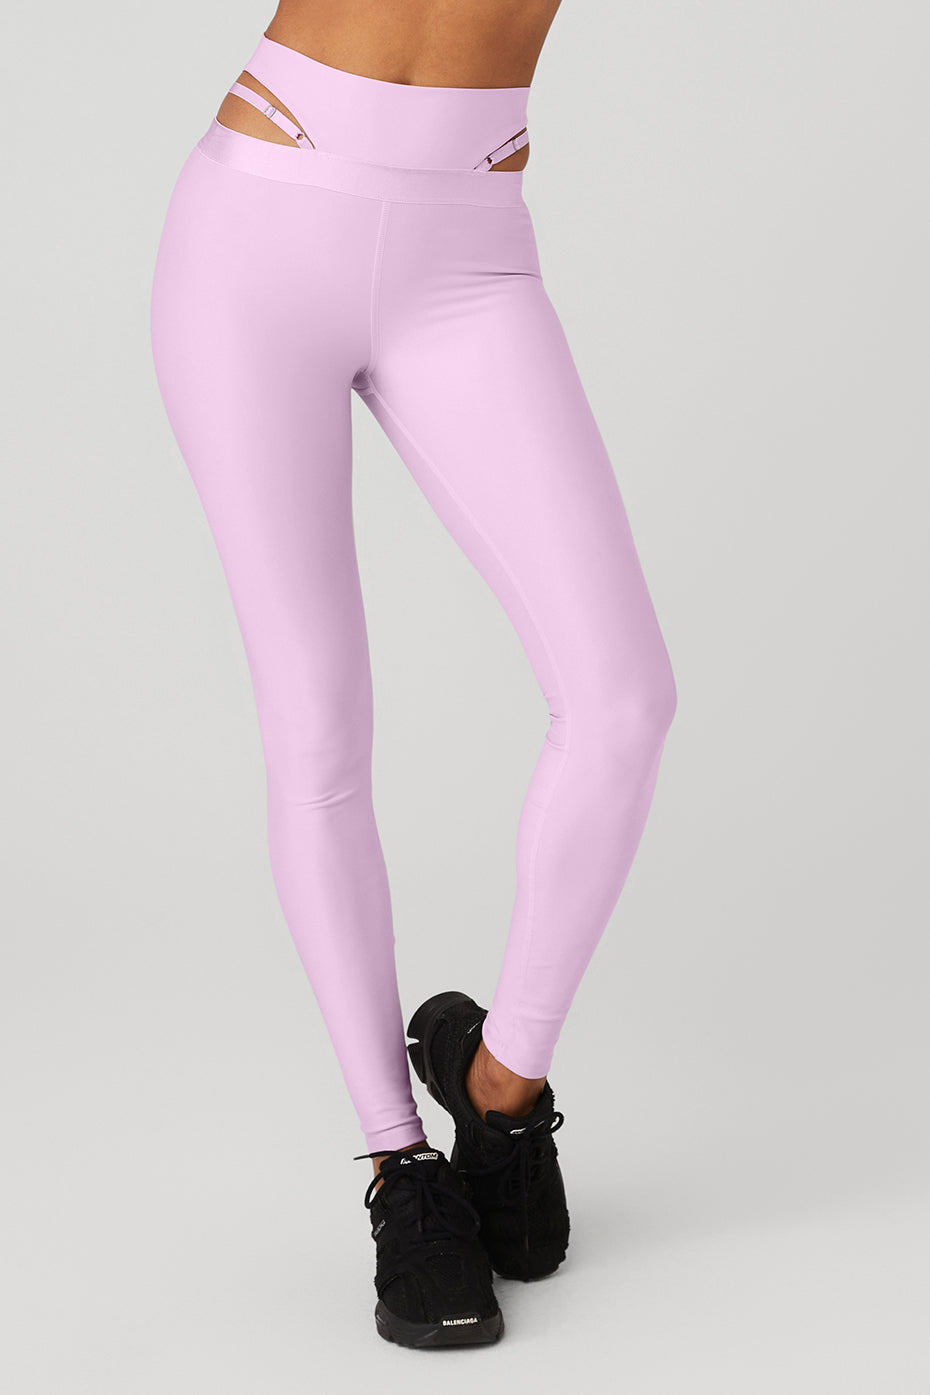 Grape Purple Blogger Fitness leggings with Cutouts